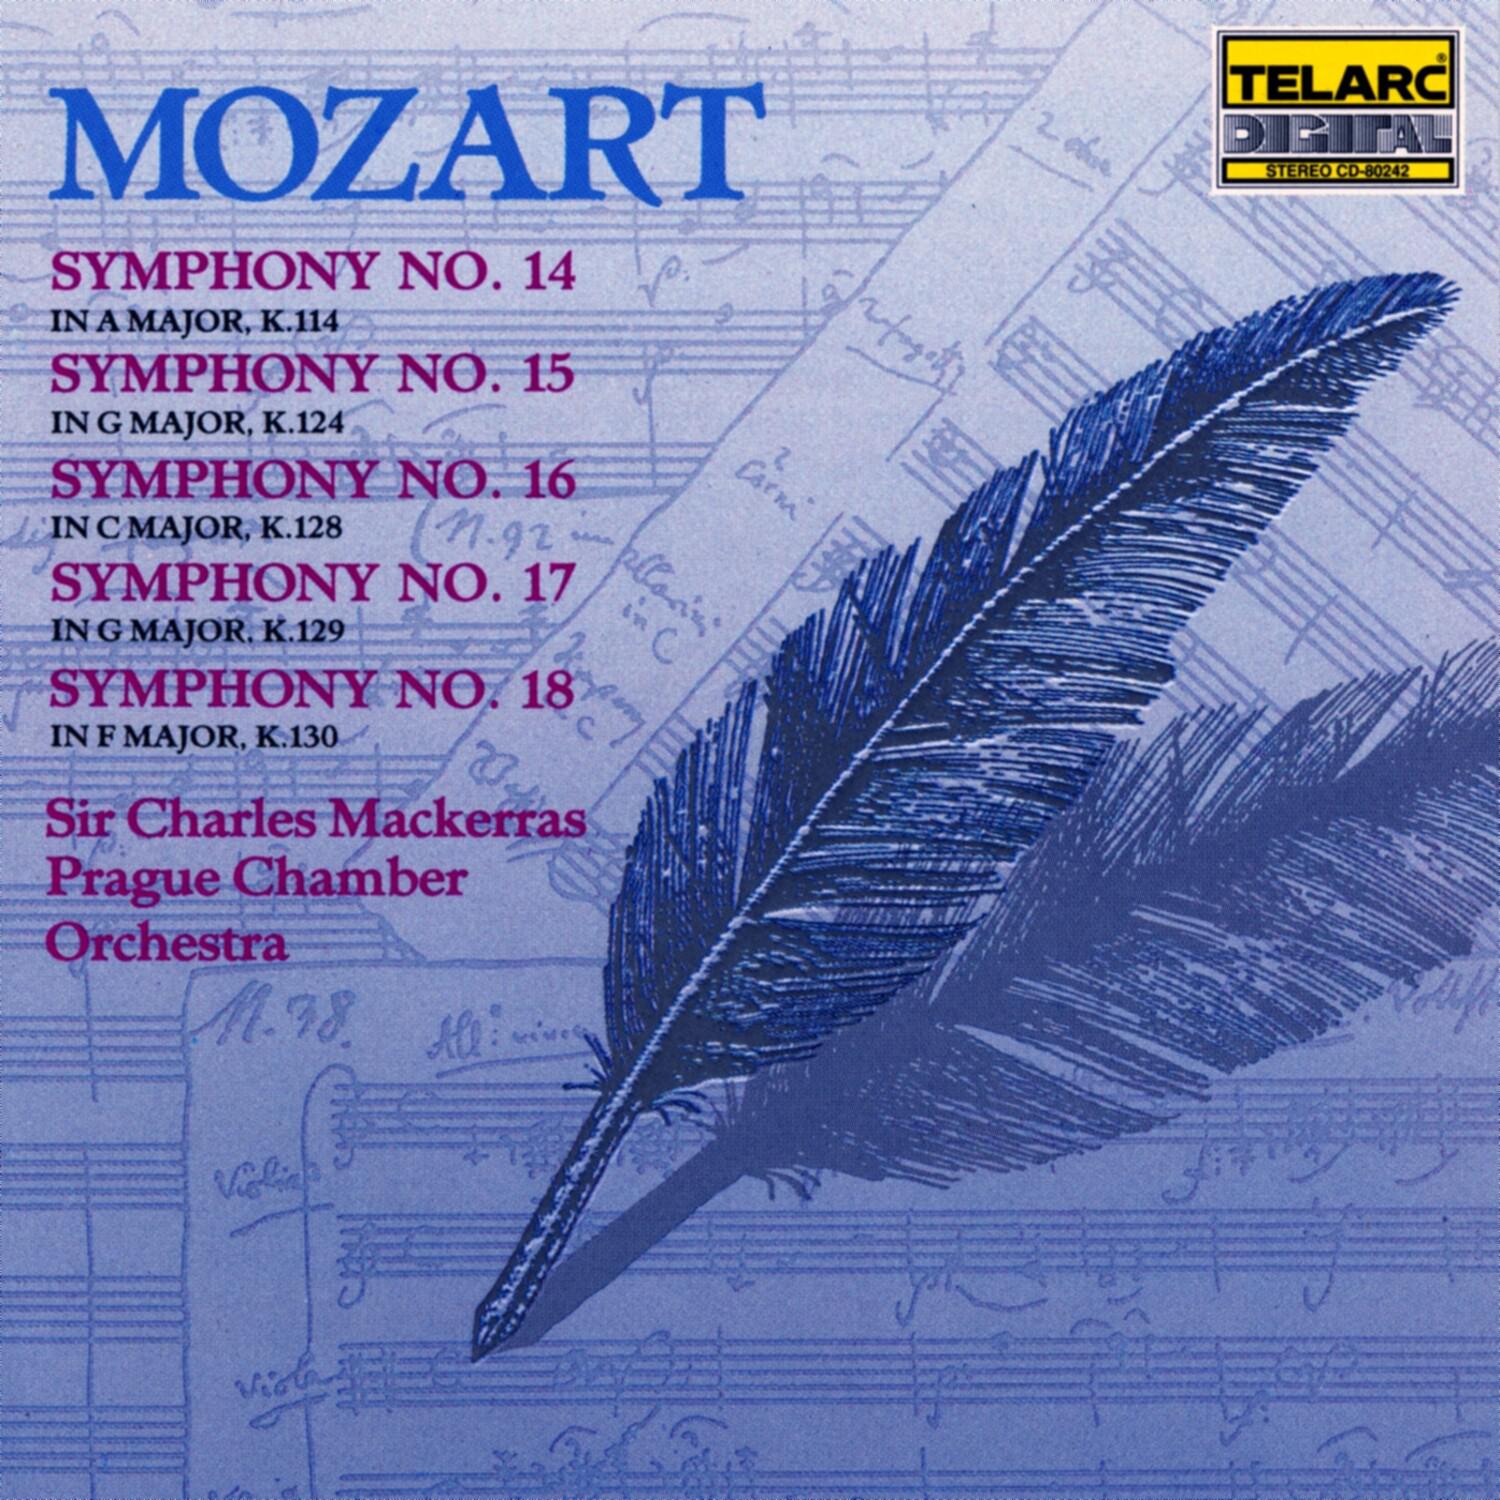 Symphony No. 14 in A major, K.114: I. Allegro moderato